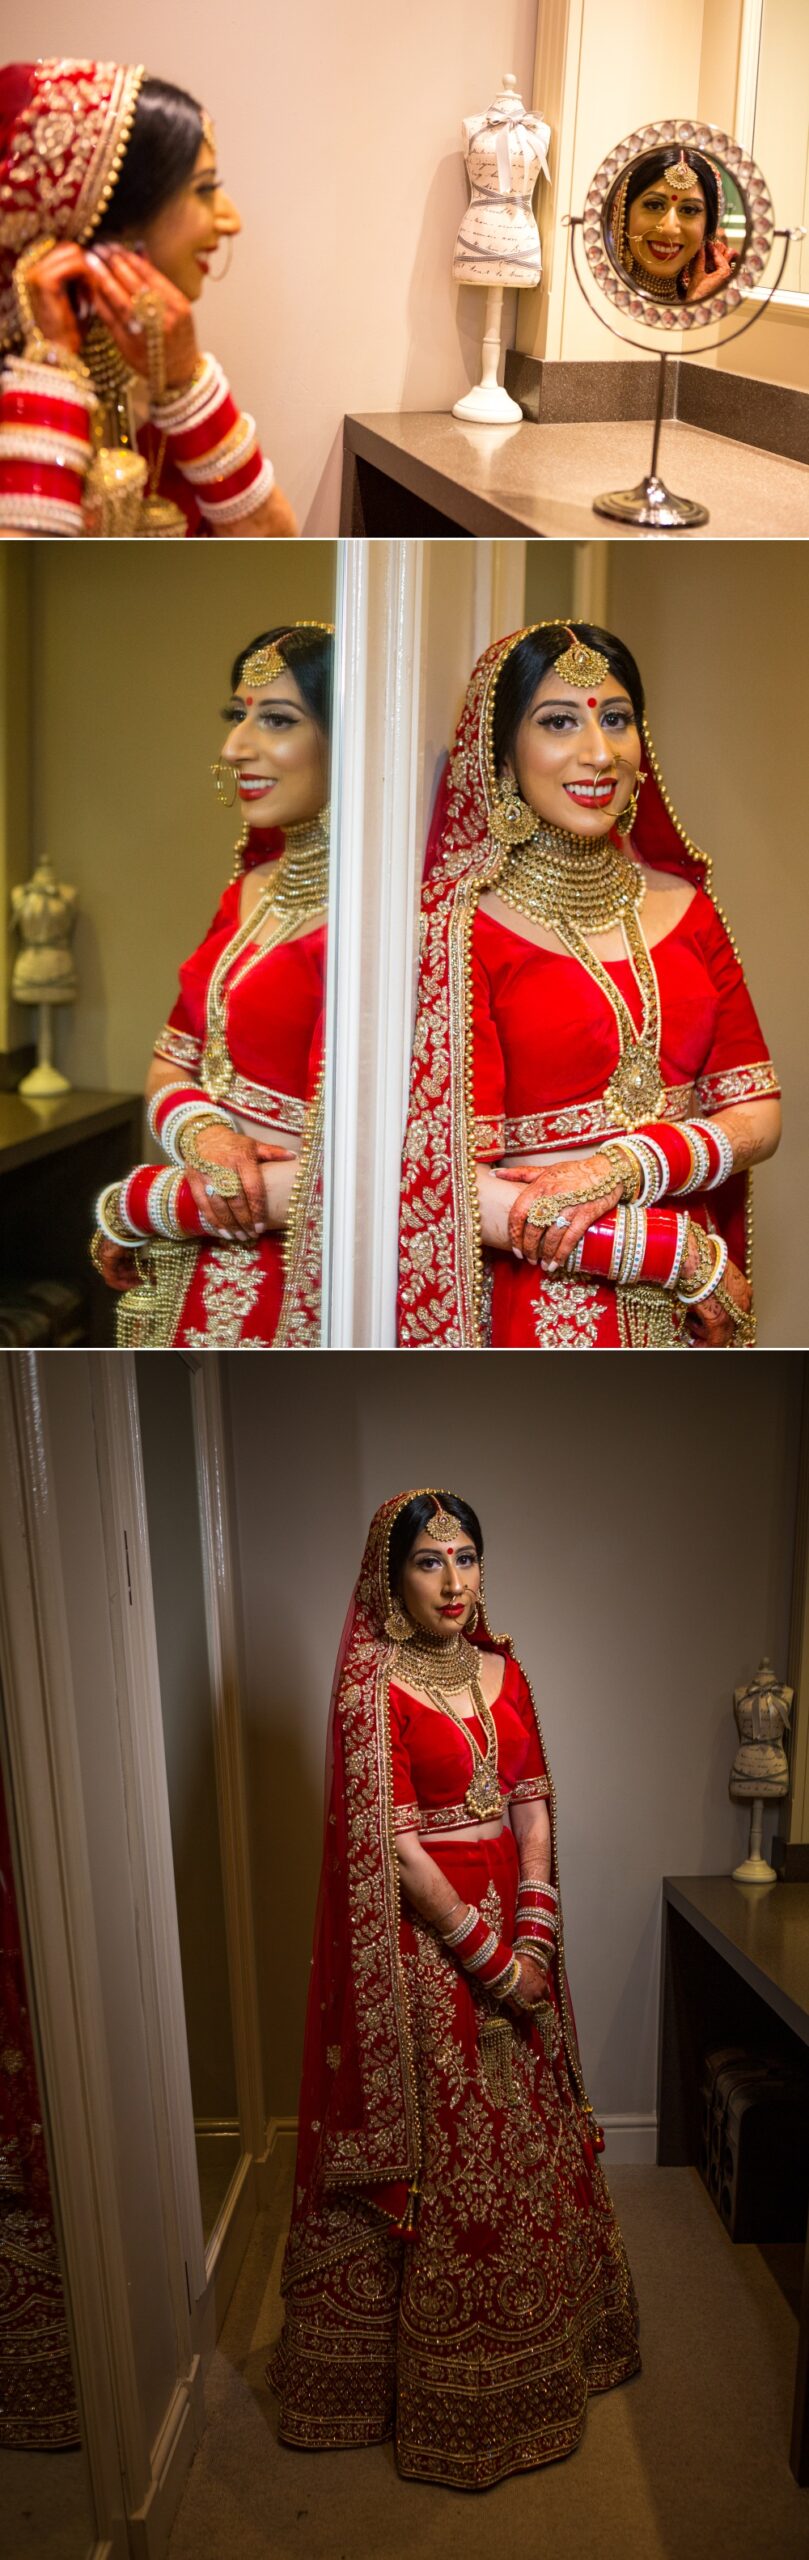 Hindu Wedding Photography at Grand Station 1 scaled